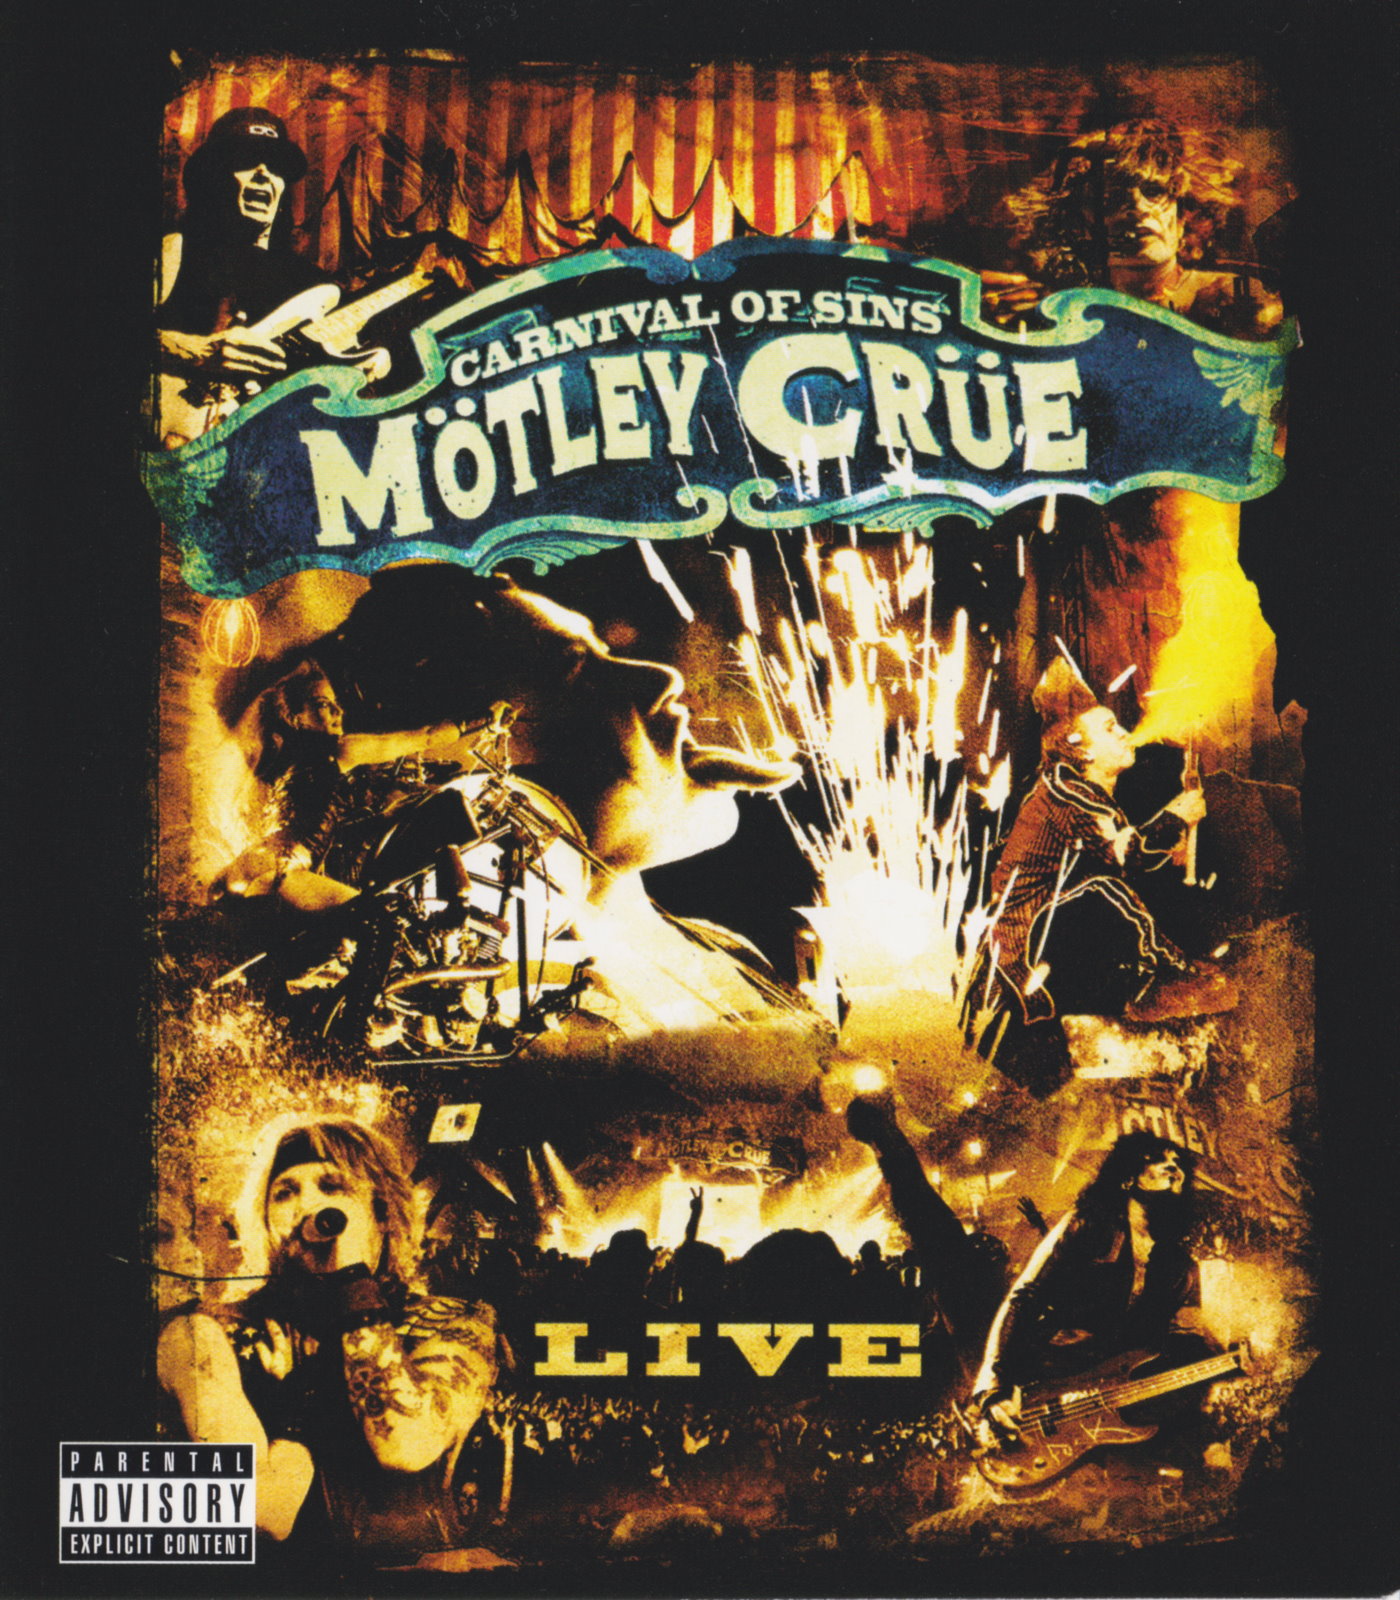 Cover - Mötley Crüe - Carnival of Sins.jpg